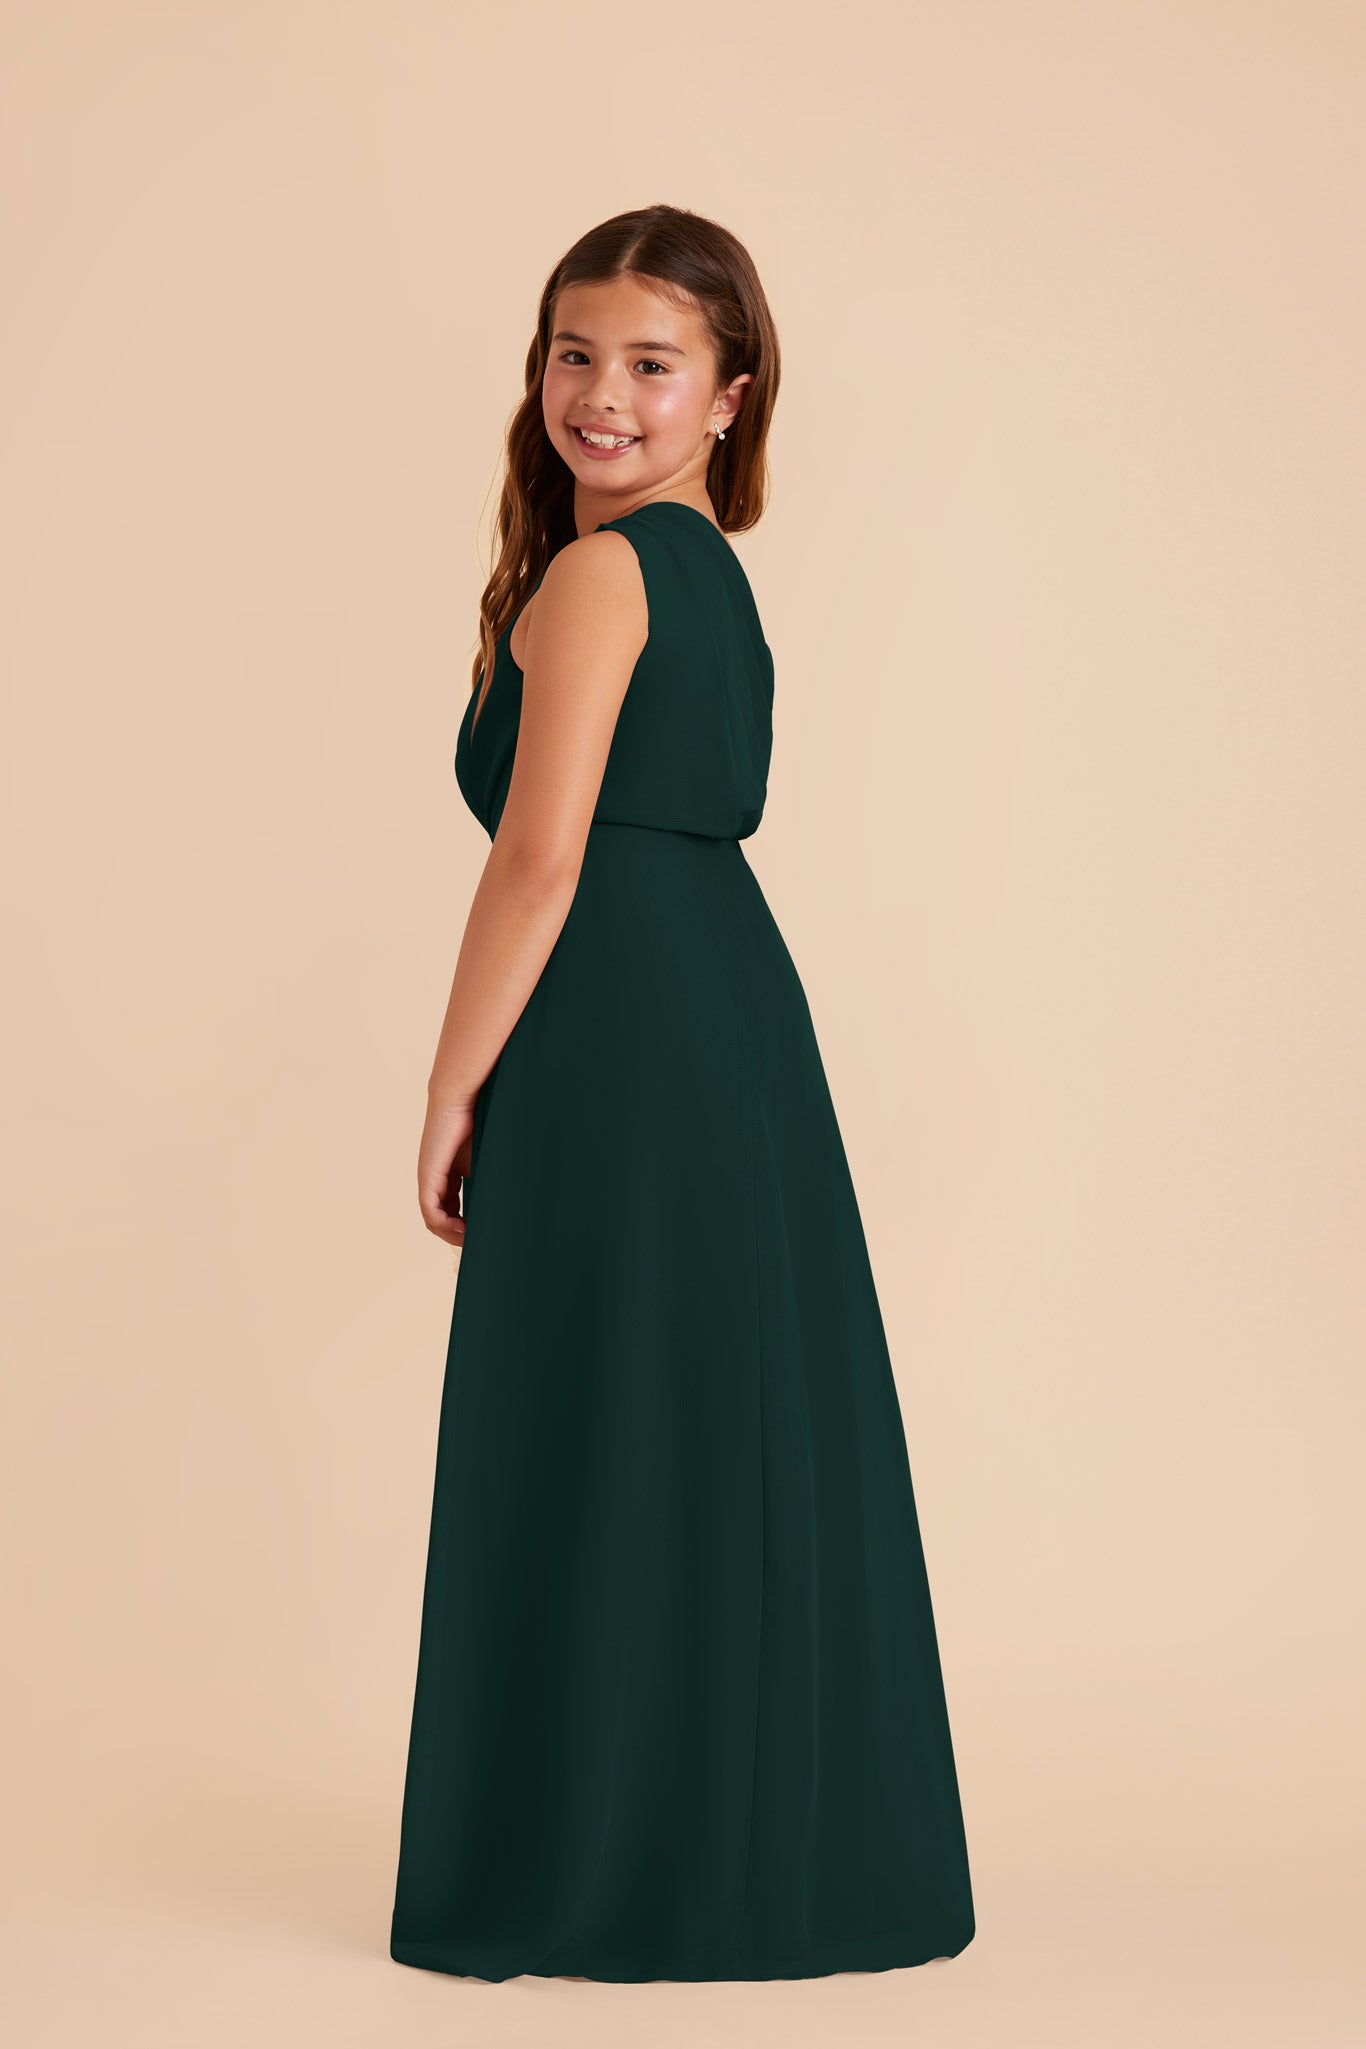 Emerald Kiara Junior Chiffon Dress by Birdy Grey